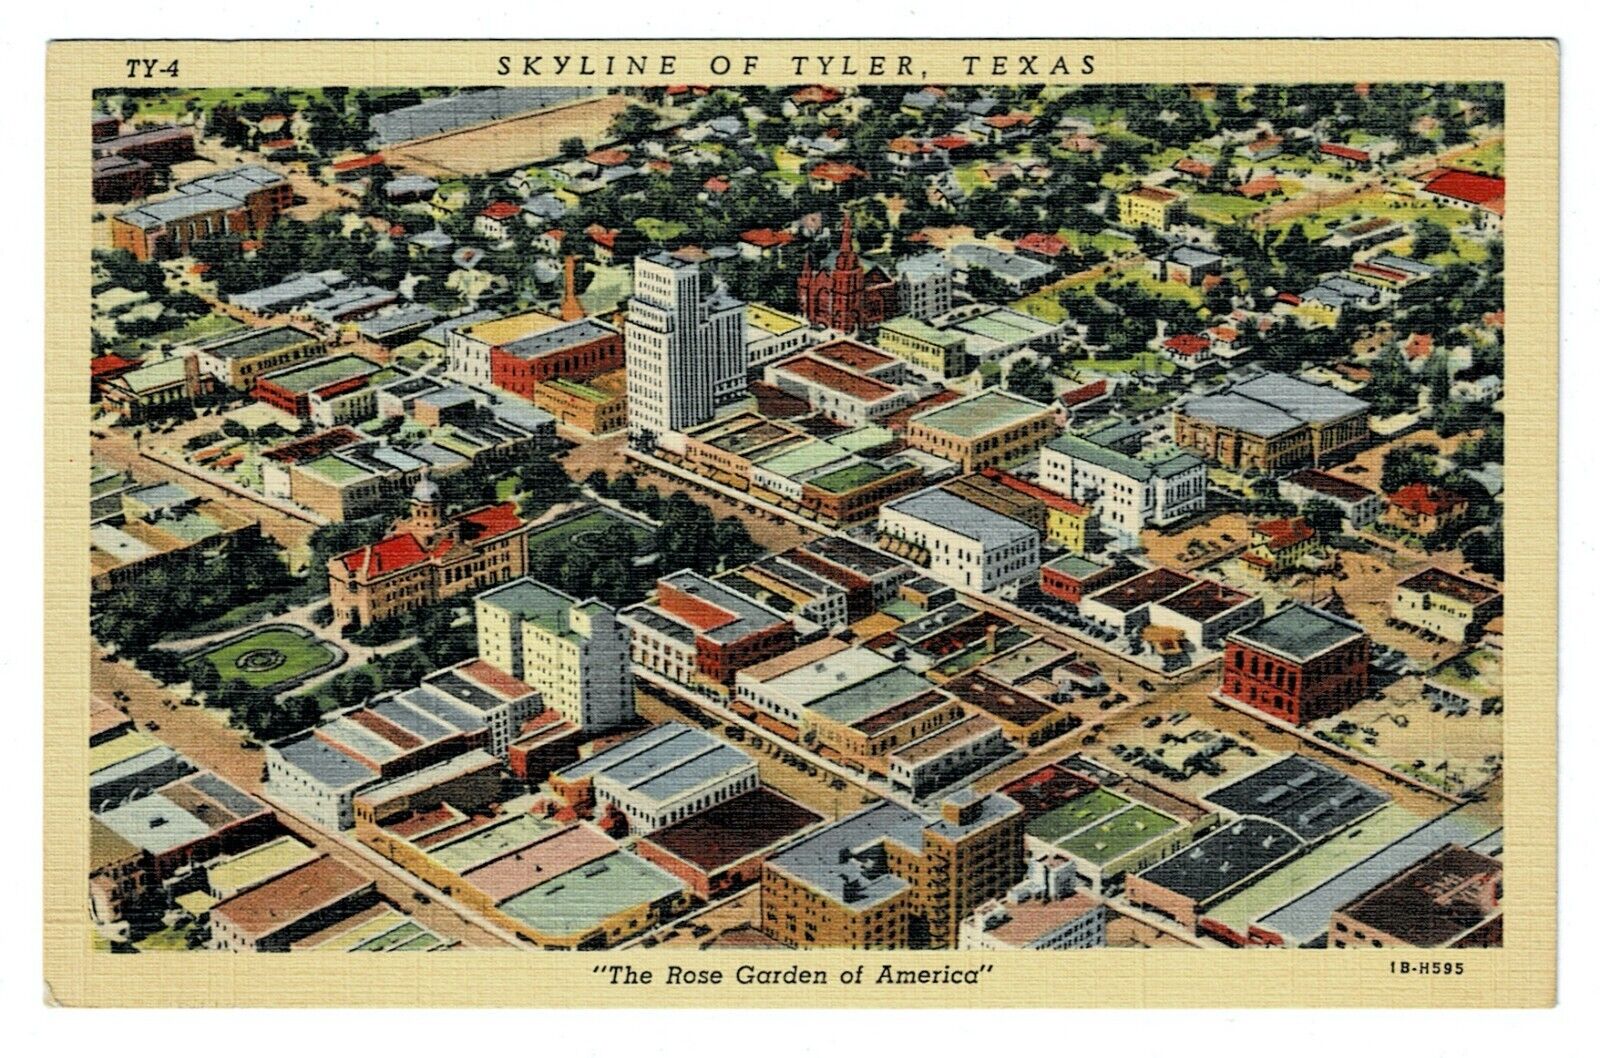 Skyline of Tyler Texas, Dallas Card Co., Vintage Postcard